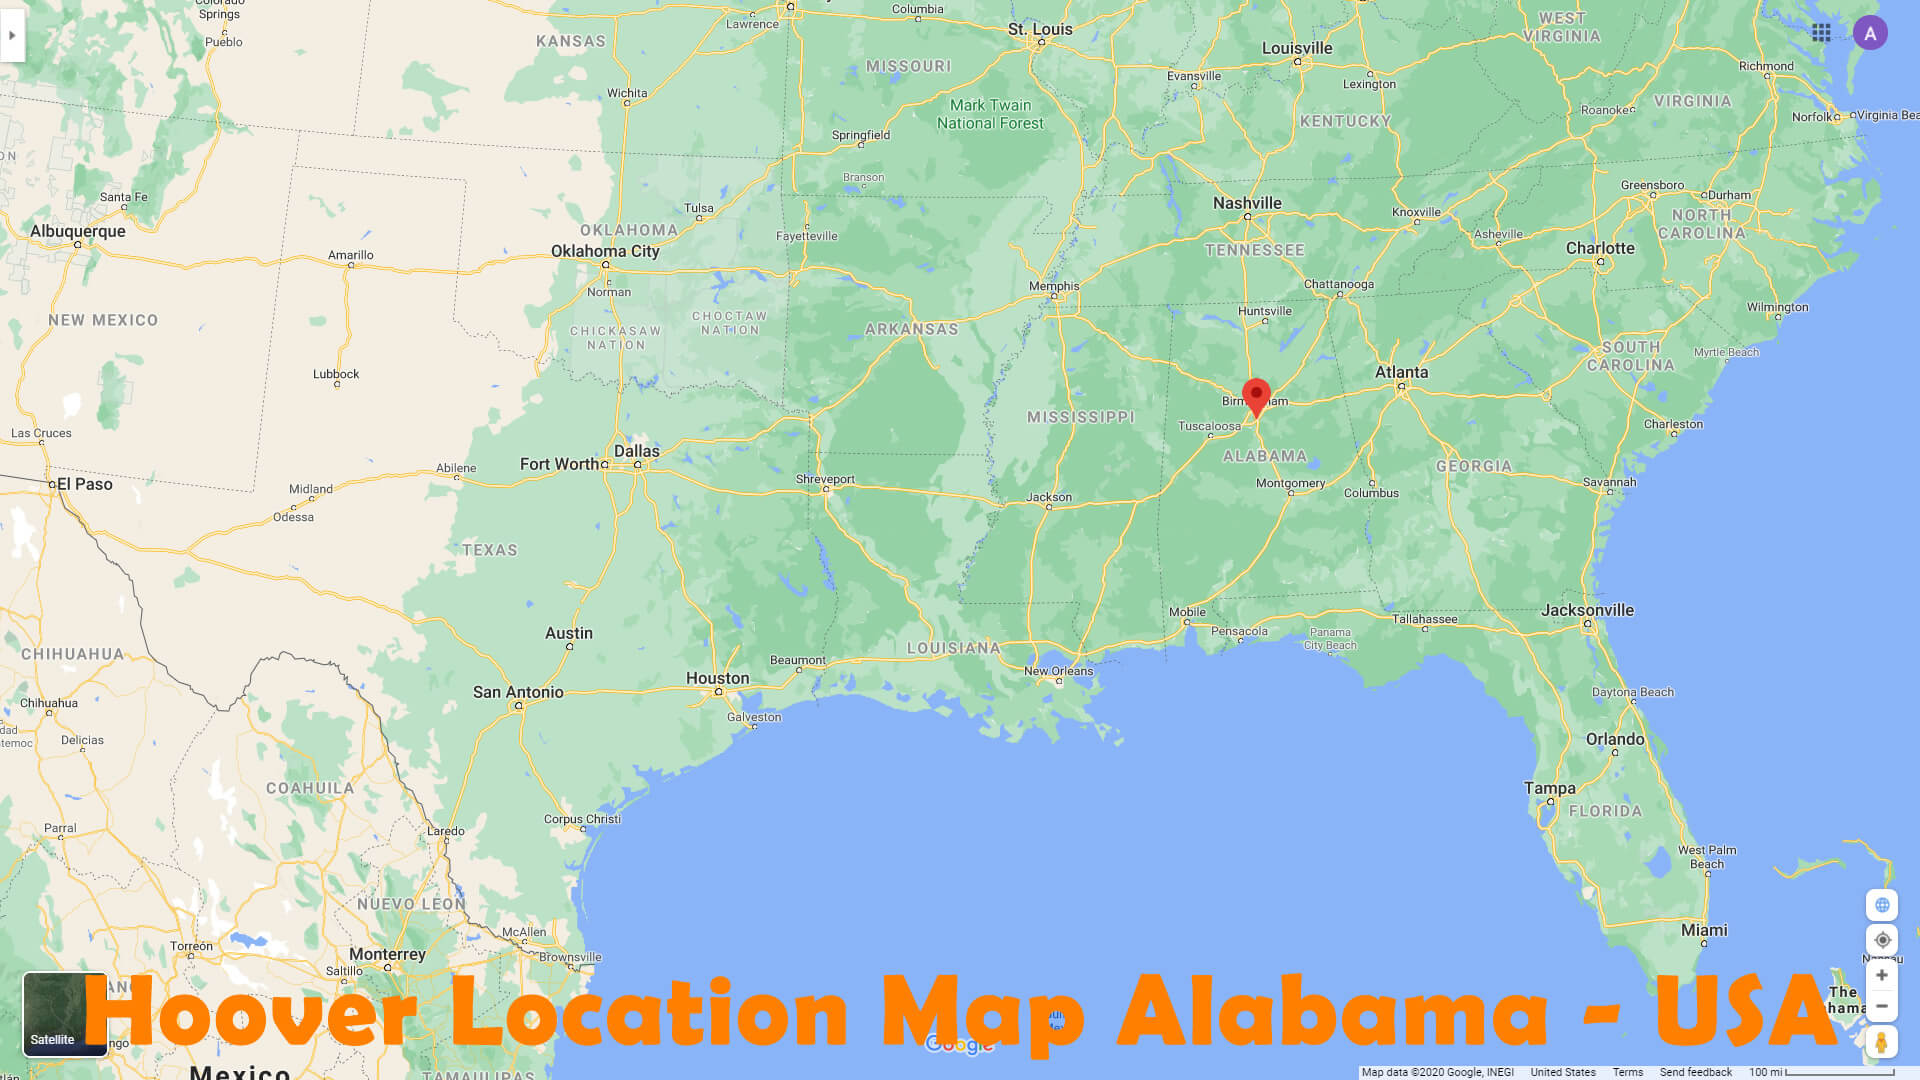 Hoover Location Map Alabama   USA